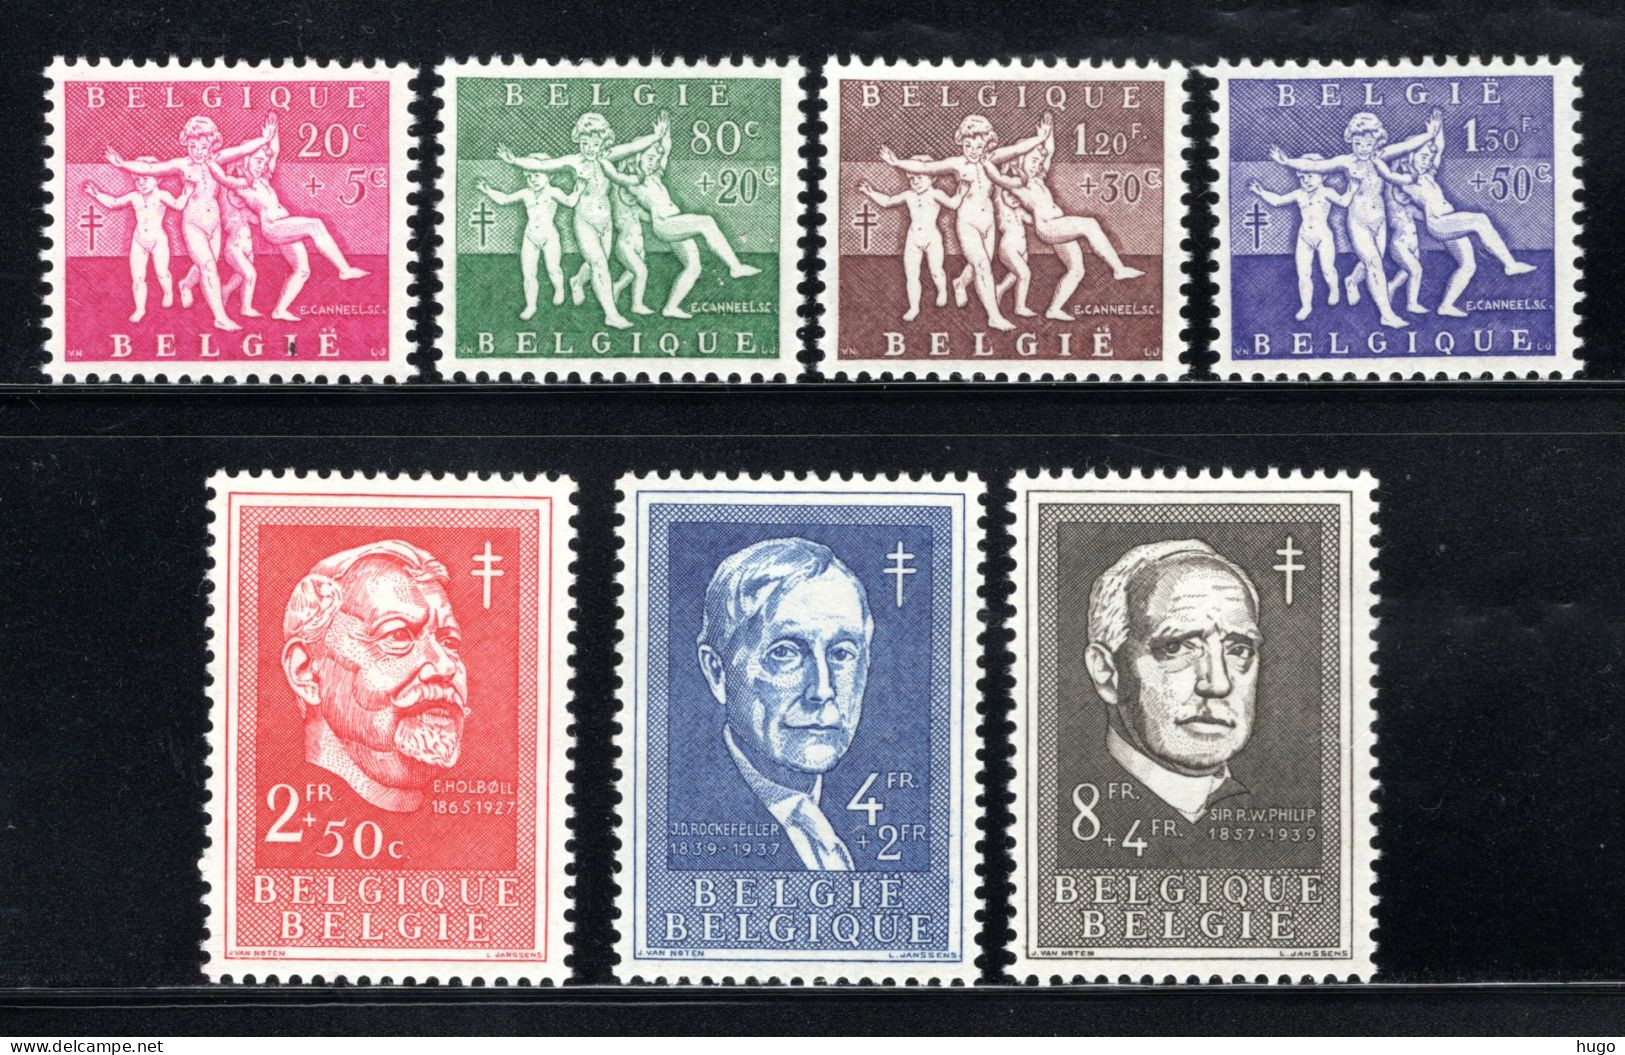 979/985 MNH 1955 - Antiteringzegels. - Unused Stamps